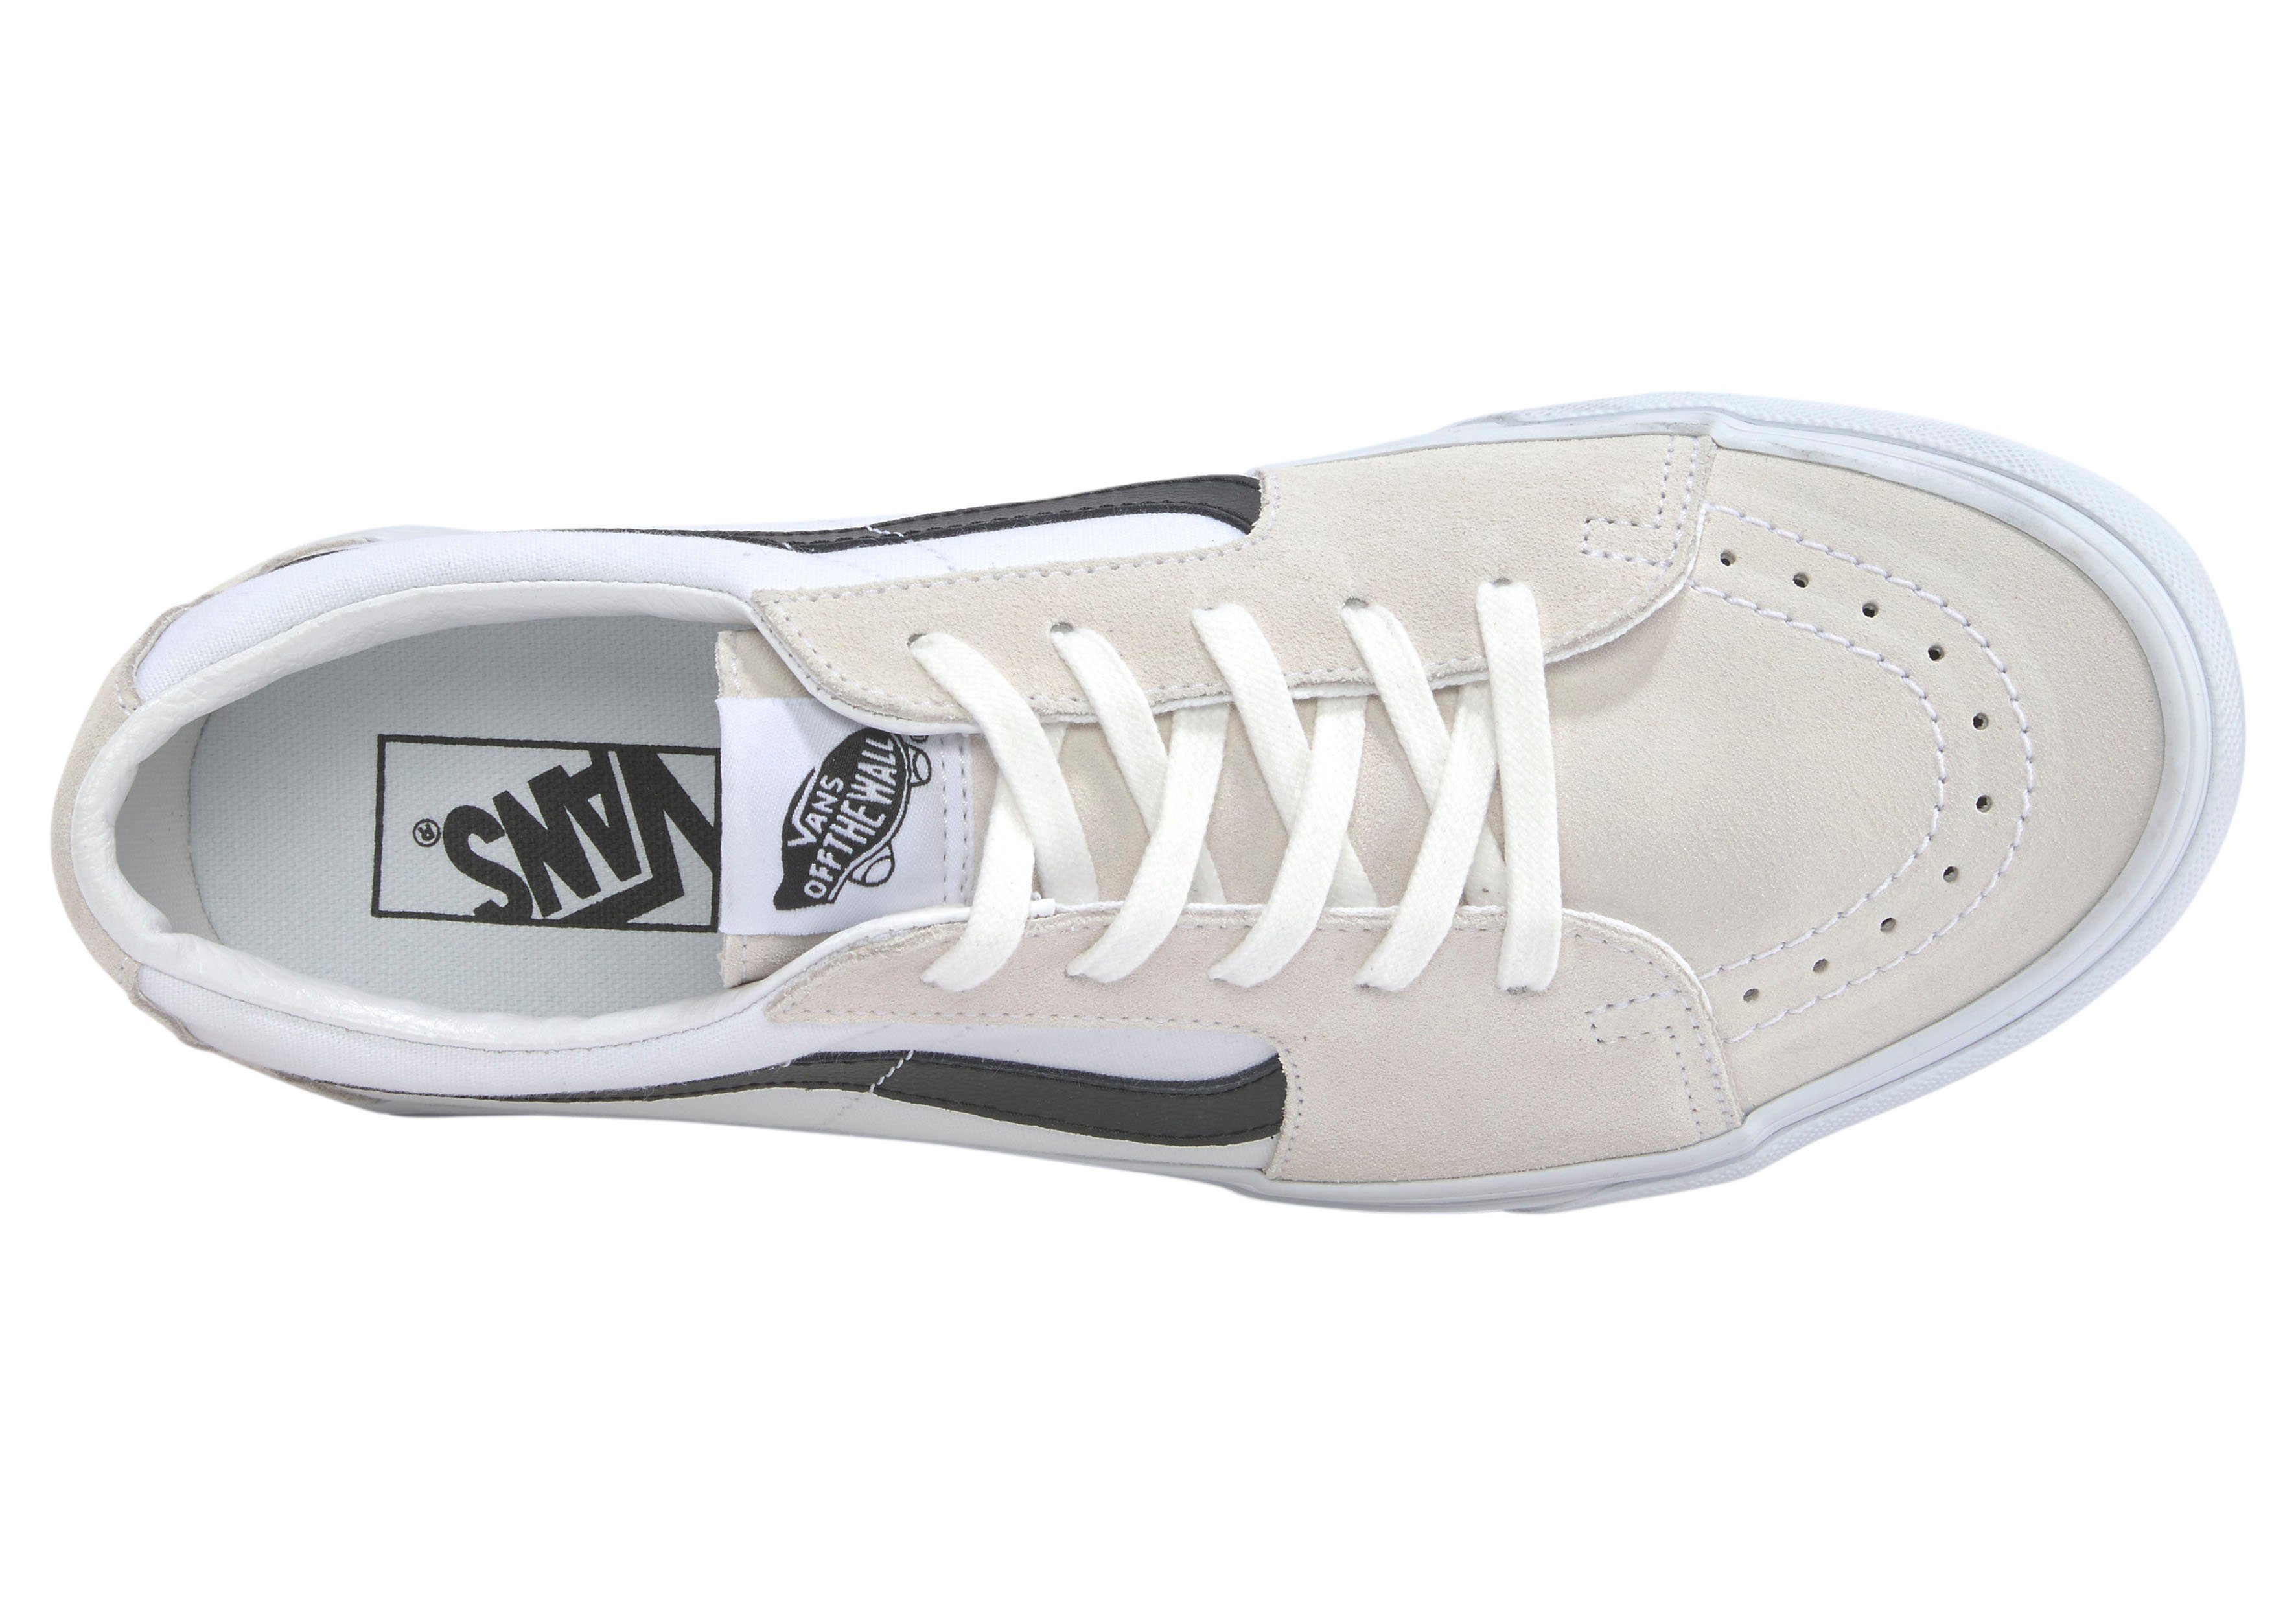 Vans offwhite-schwarz Sk8-Low Sneaker